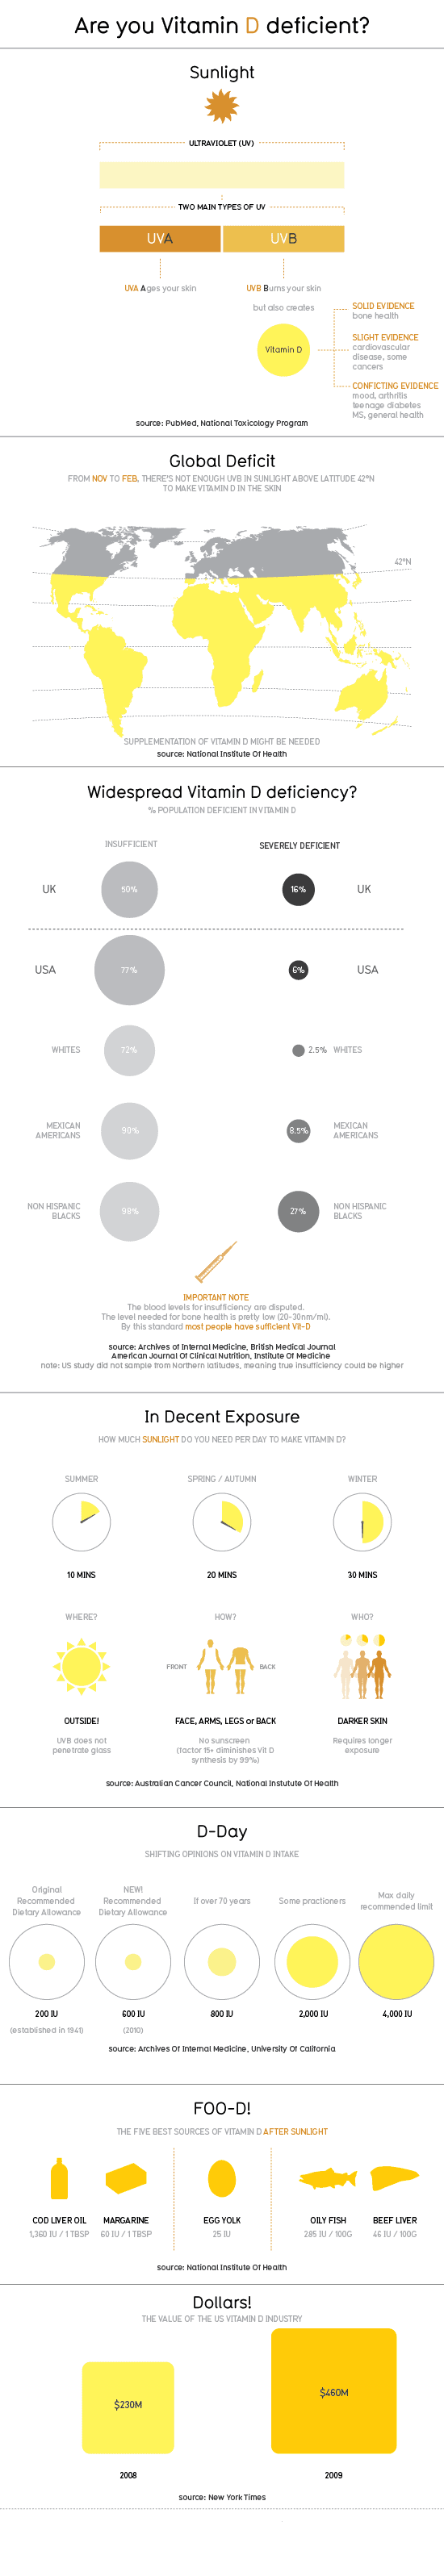 Vitamin D Deficient Infographic